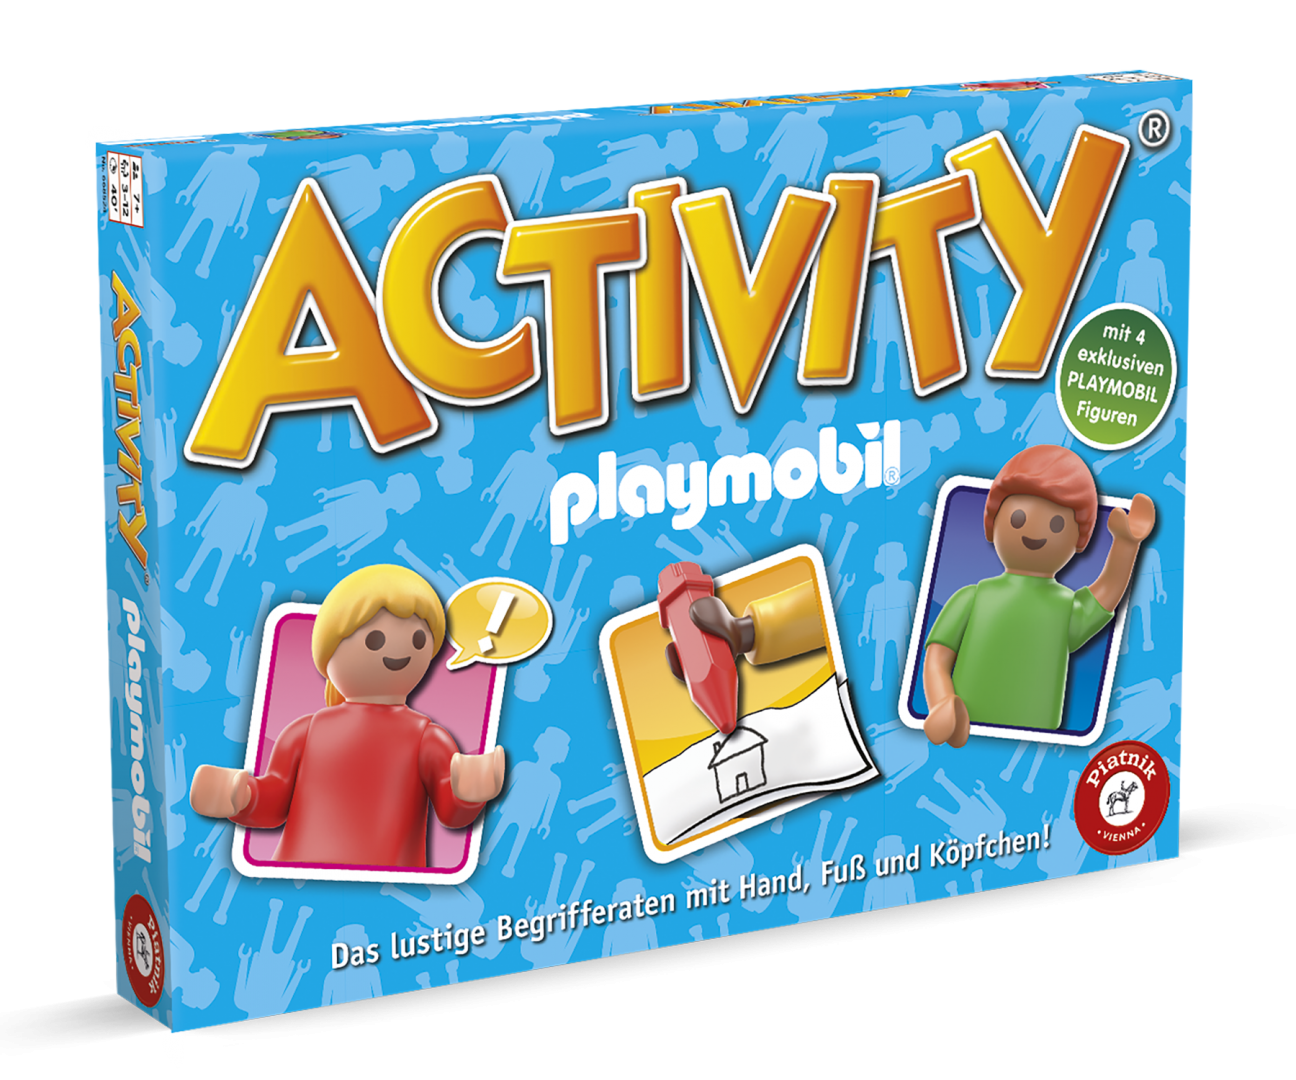 ACTIVITY PLAYMOBIL